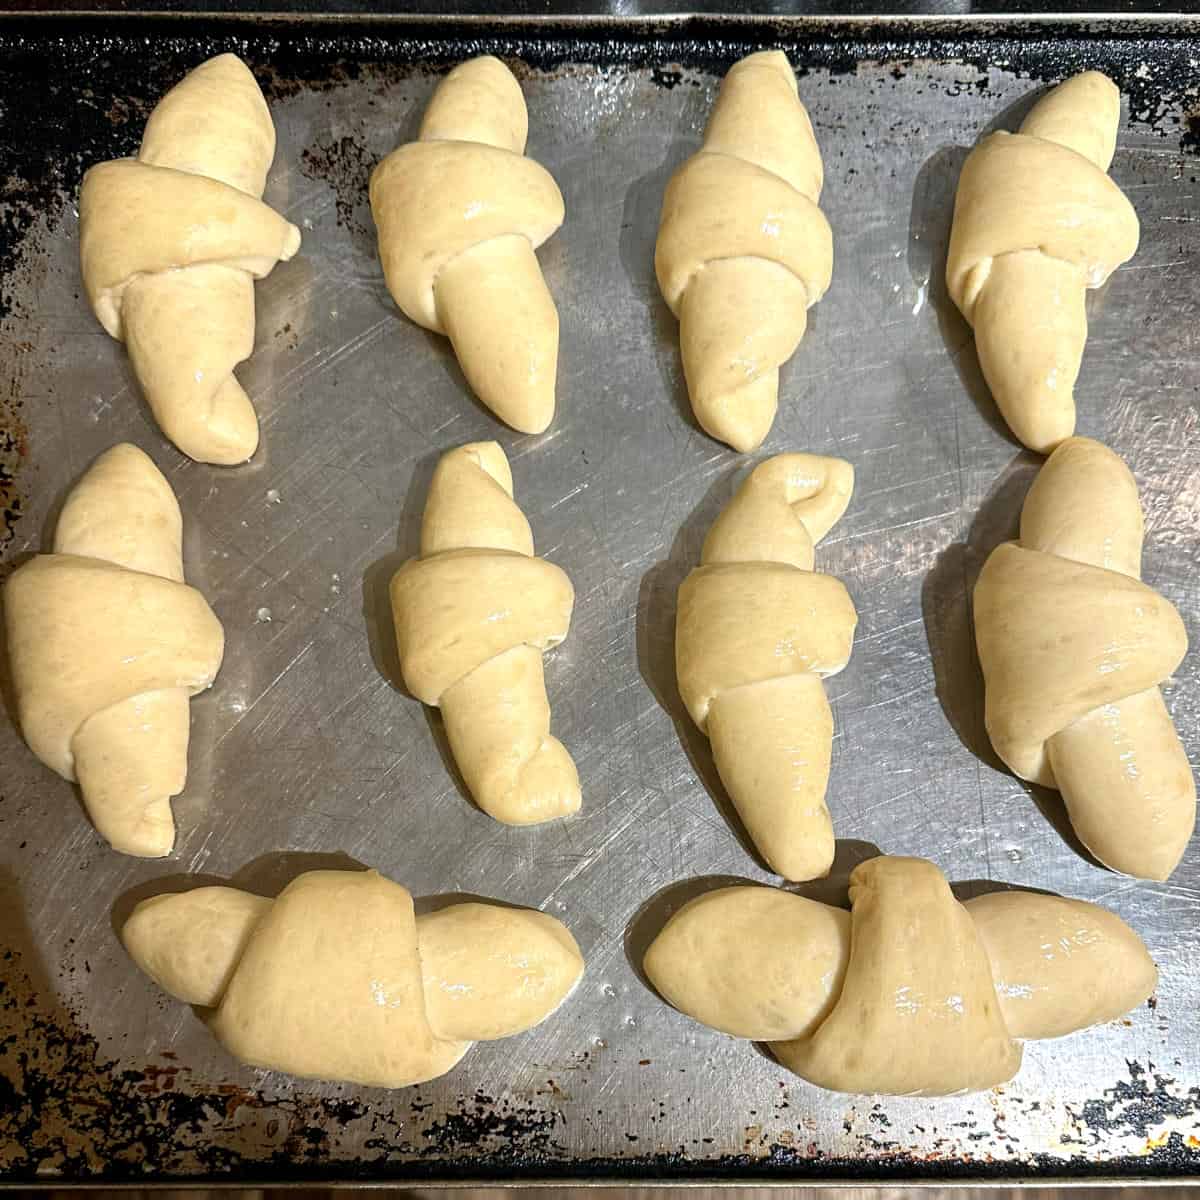 Crescent rolls on baking sheet before baking.